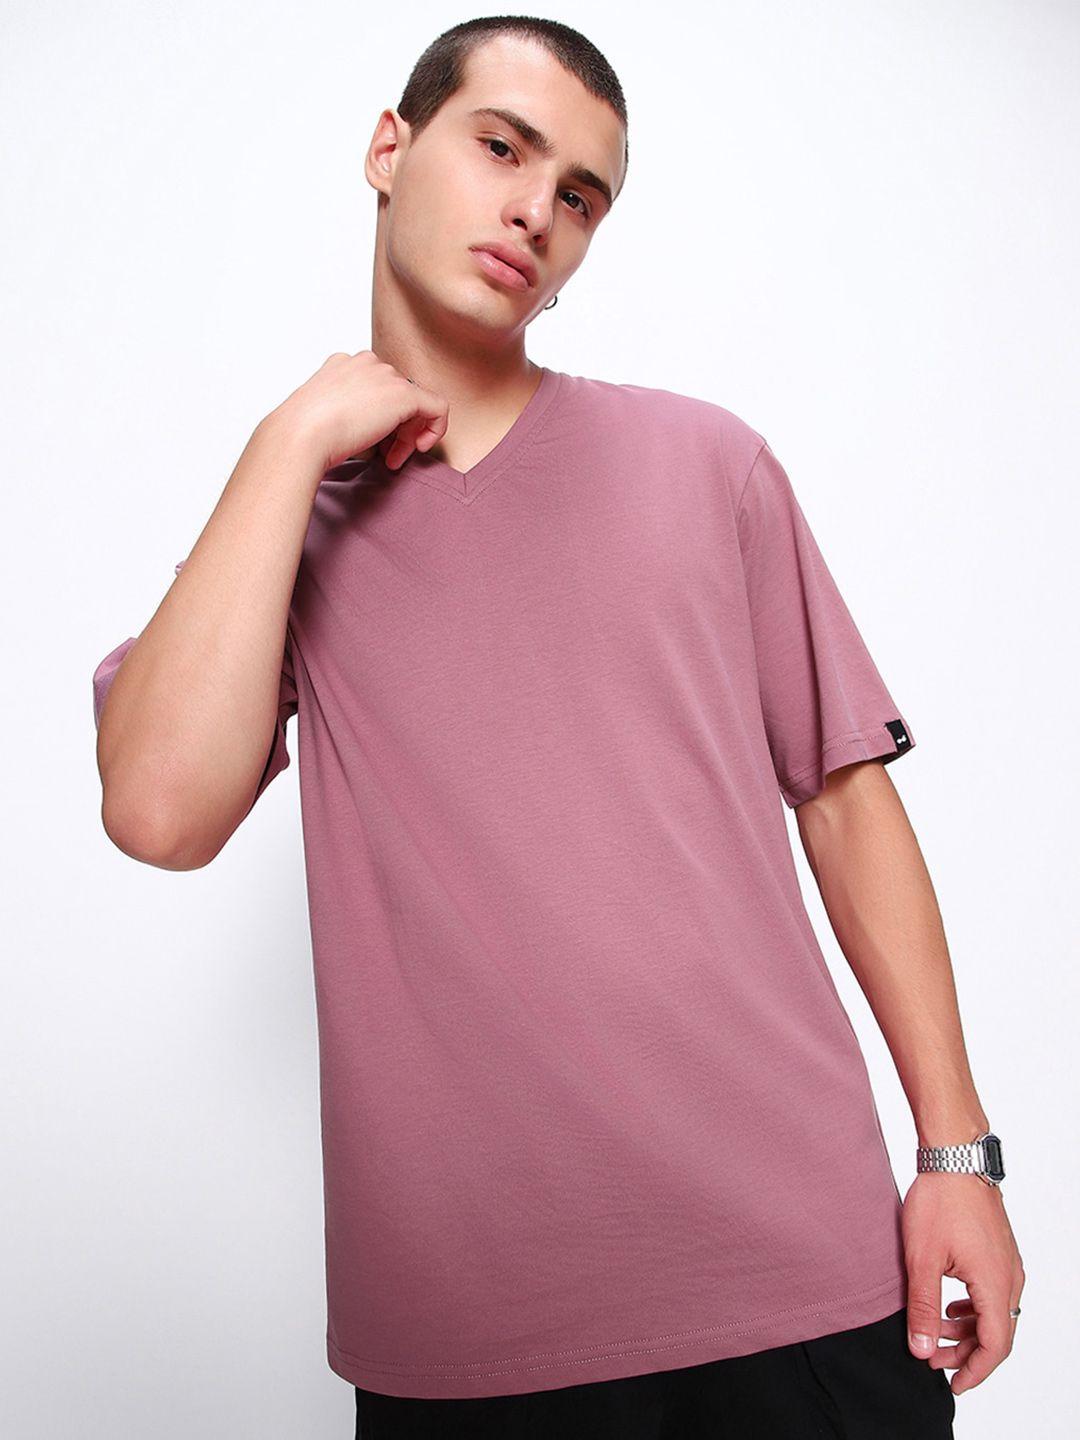 bewakoof purple v-neck oversized pure cotton t-shirt